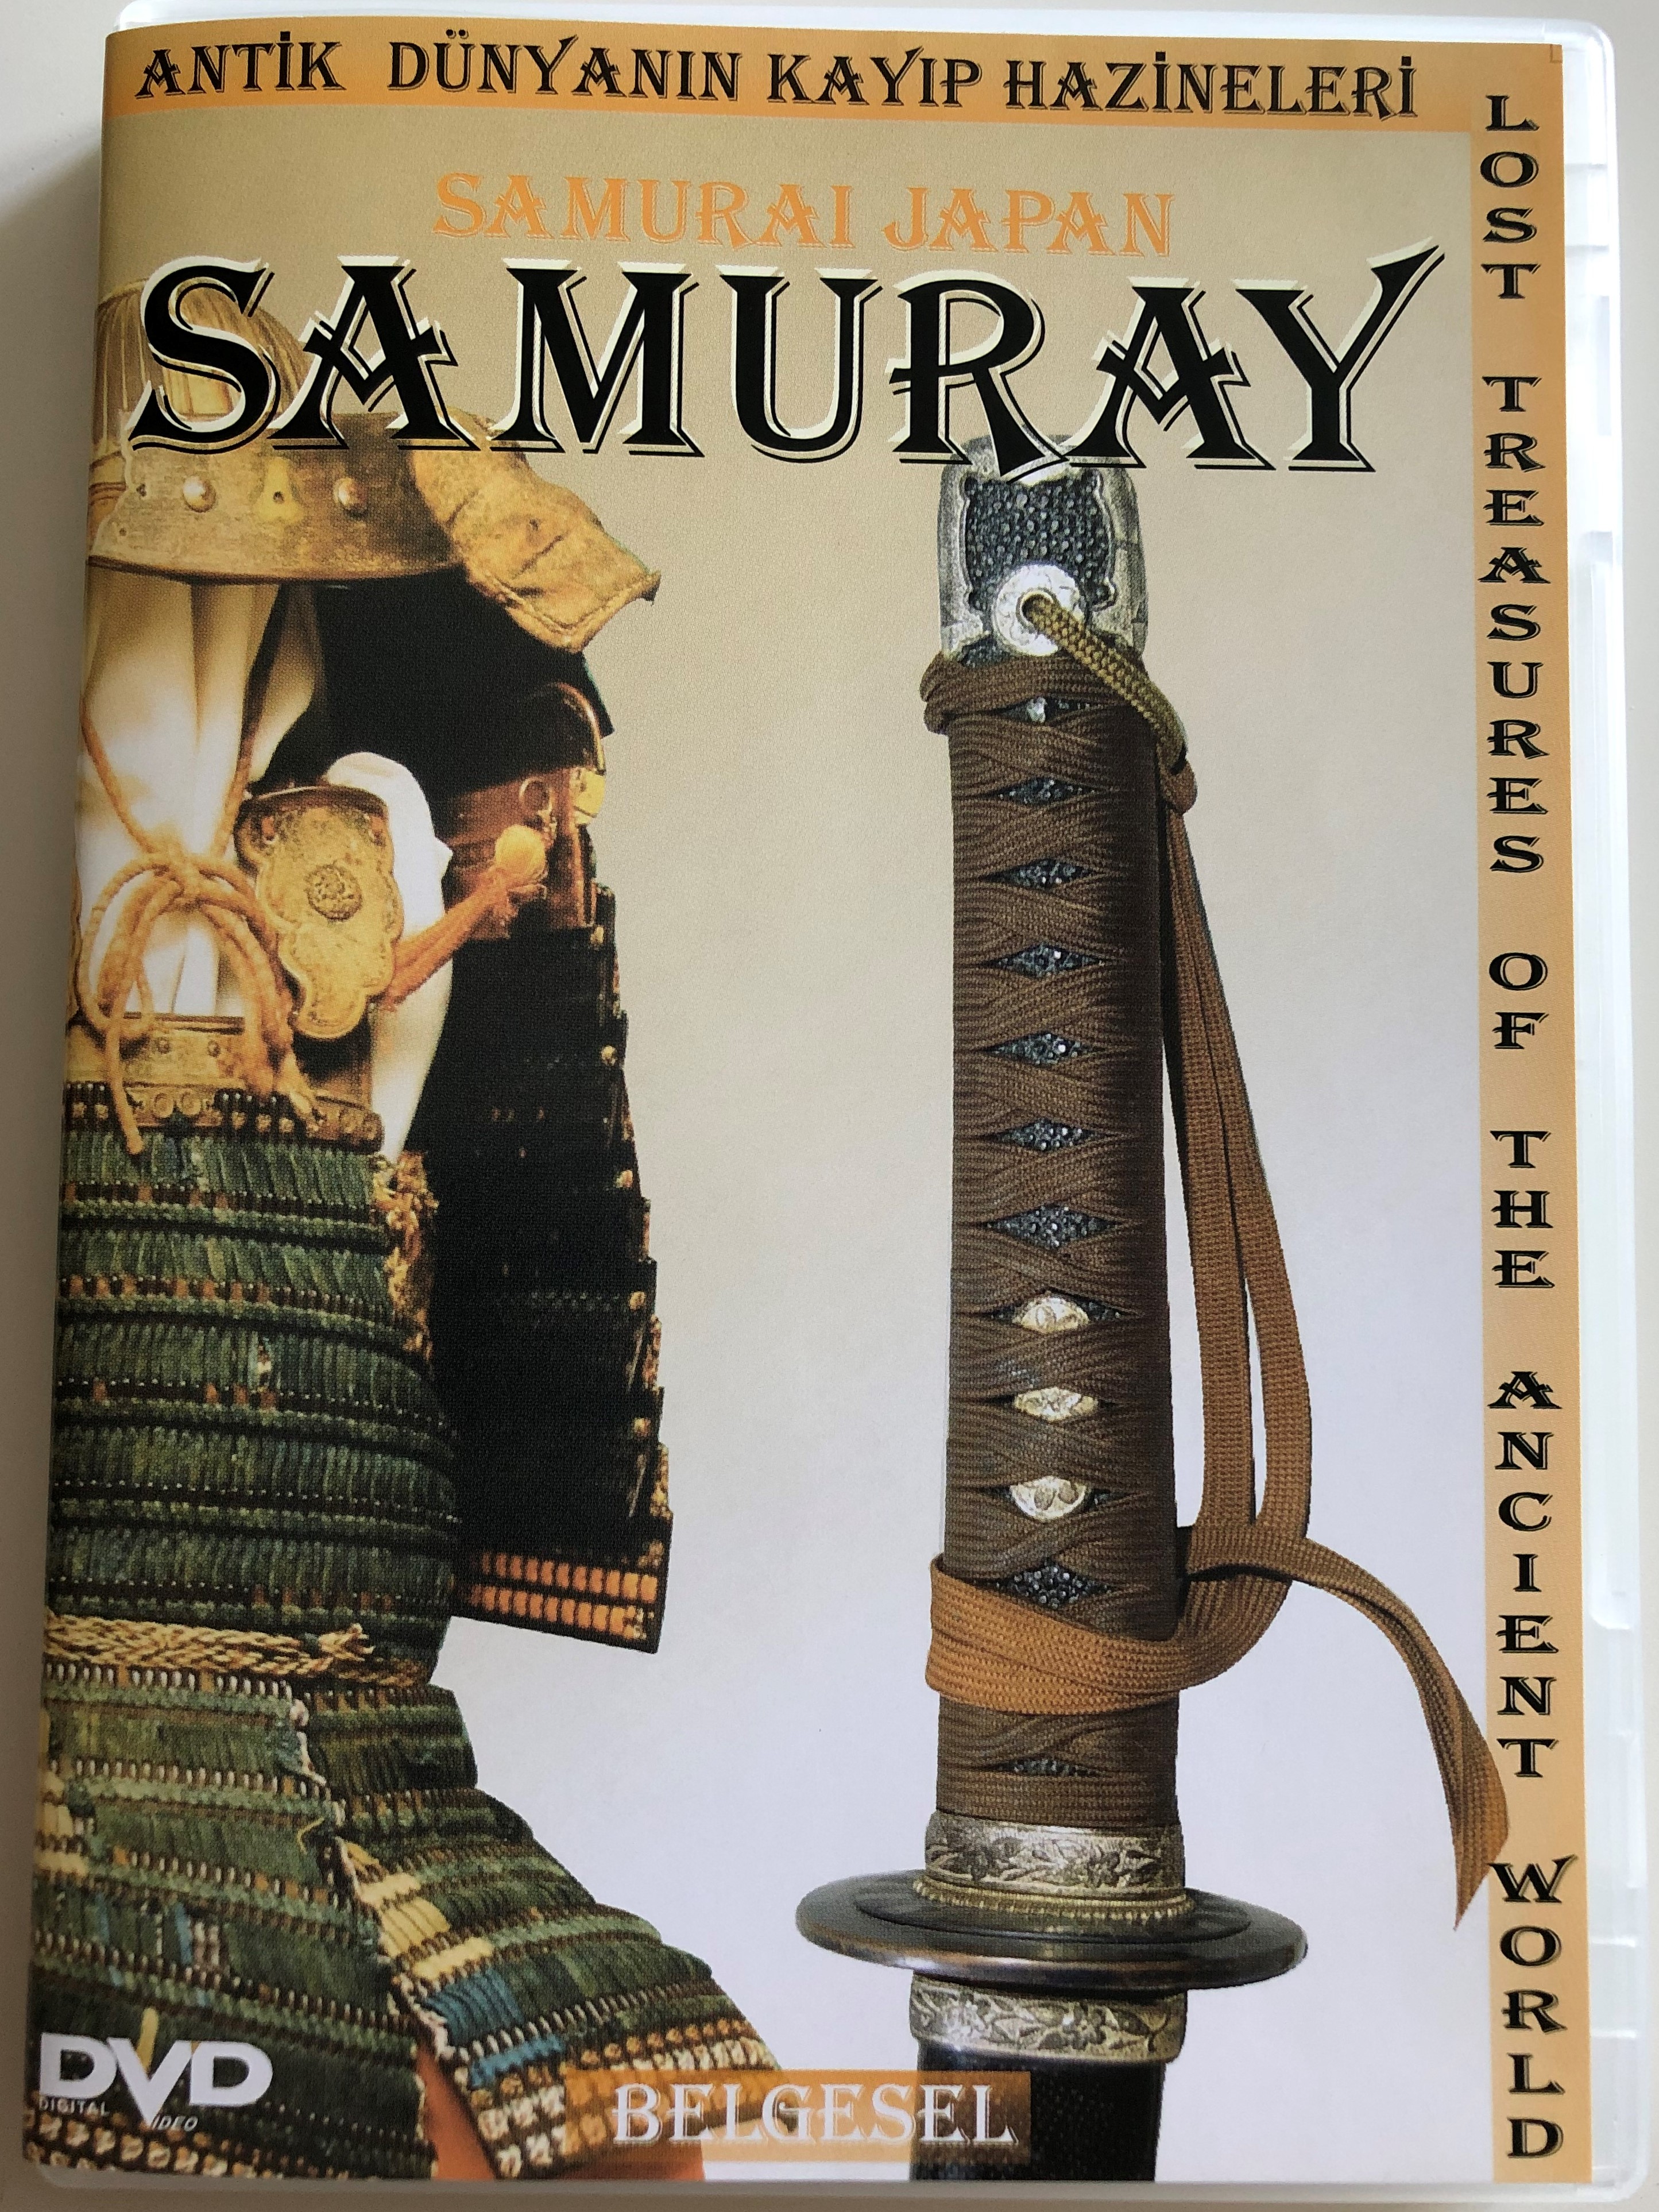 samurai-japan-lost-treasures-of-the-ancient-world-dvd-2007-samuray-antik-d-nyanin-kayip-hazineleri-directed-by-chris-gormlie-documentary-about-japanese-samurais-1-.jpg